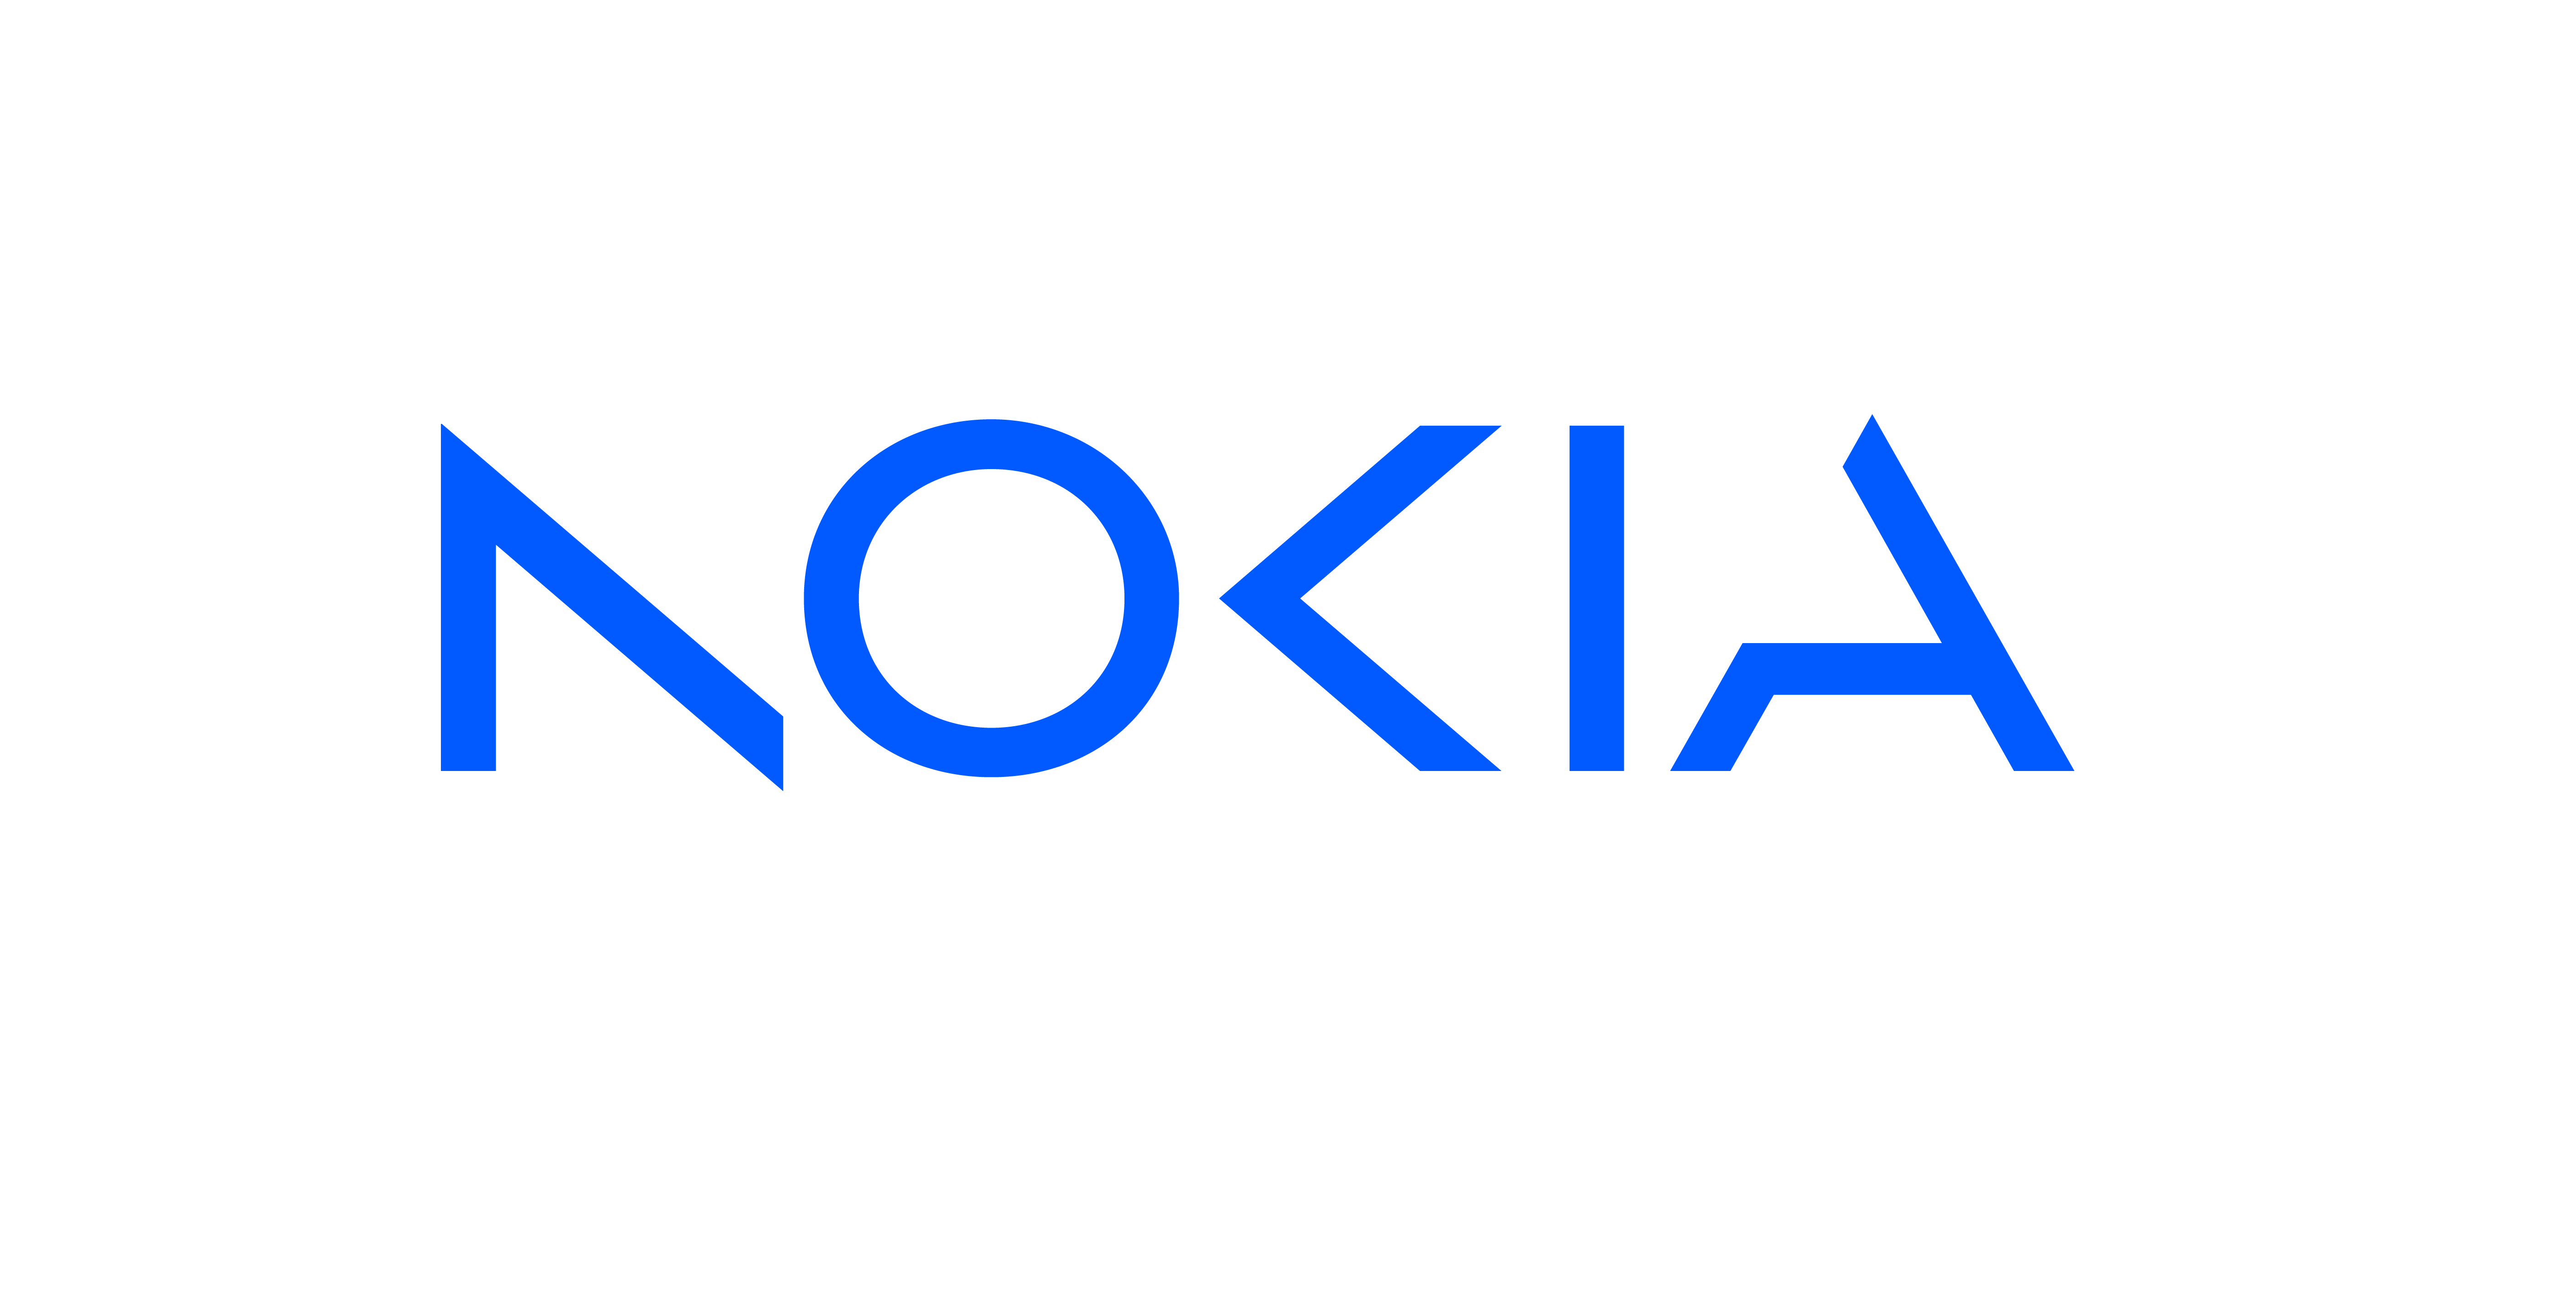 Nokia new Logo vector png ai svg